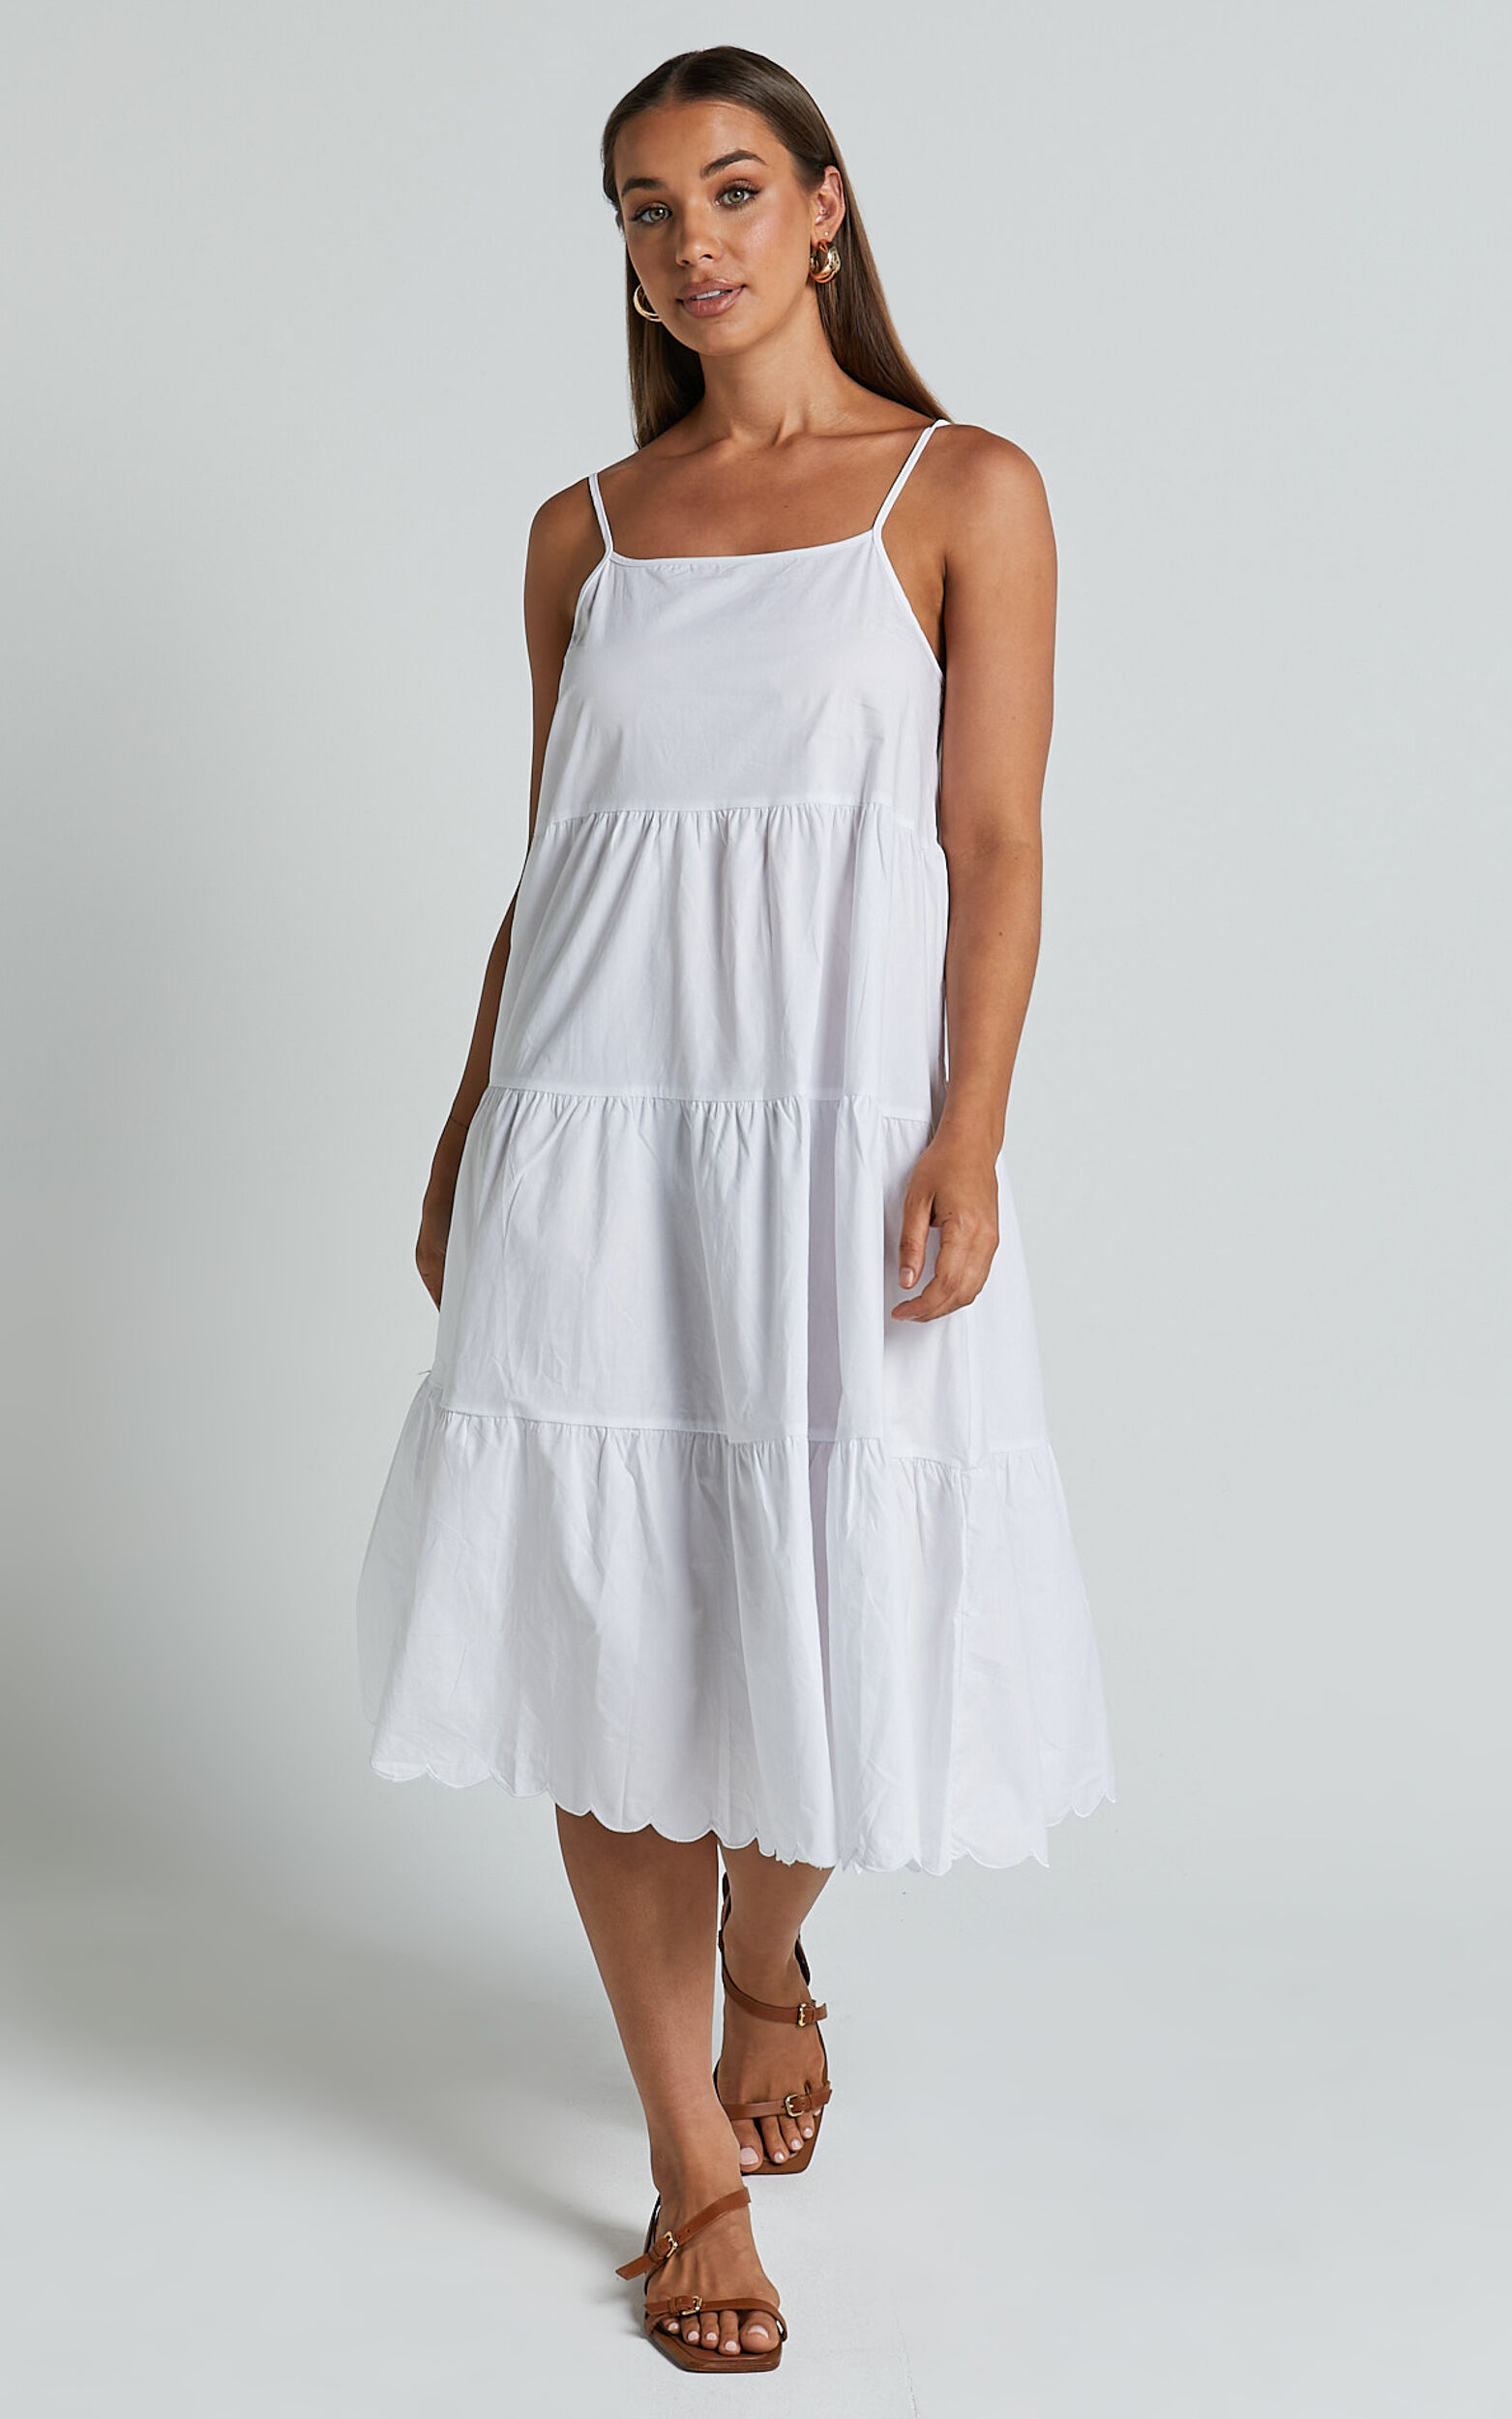 Siony Midi Dress - Scoop Neck Strappy Scallop Hem Tiered Dress in White - 06, WHT2